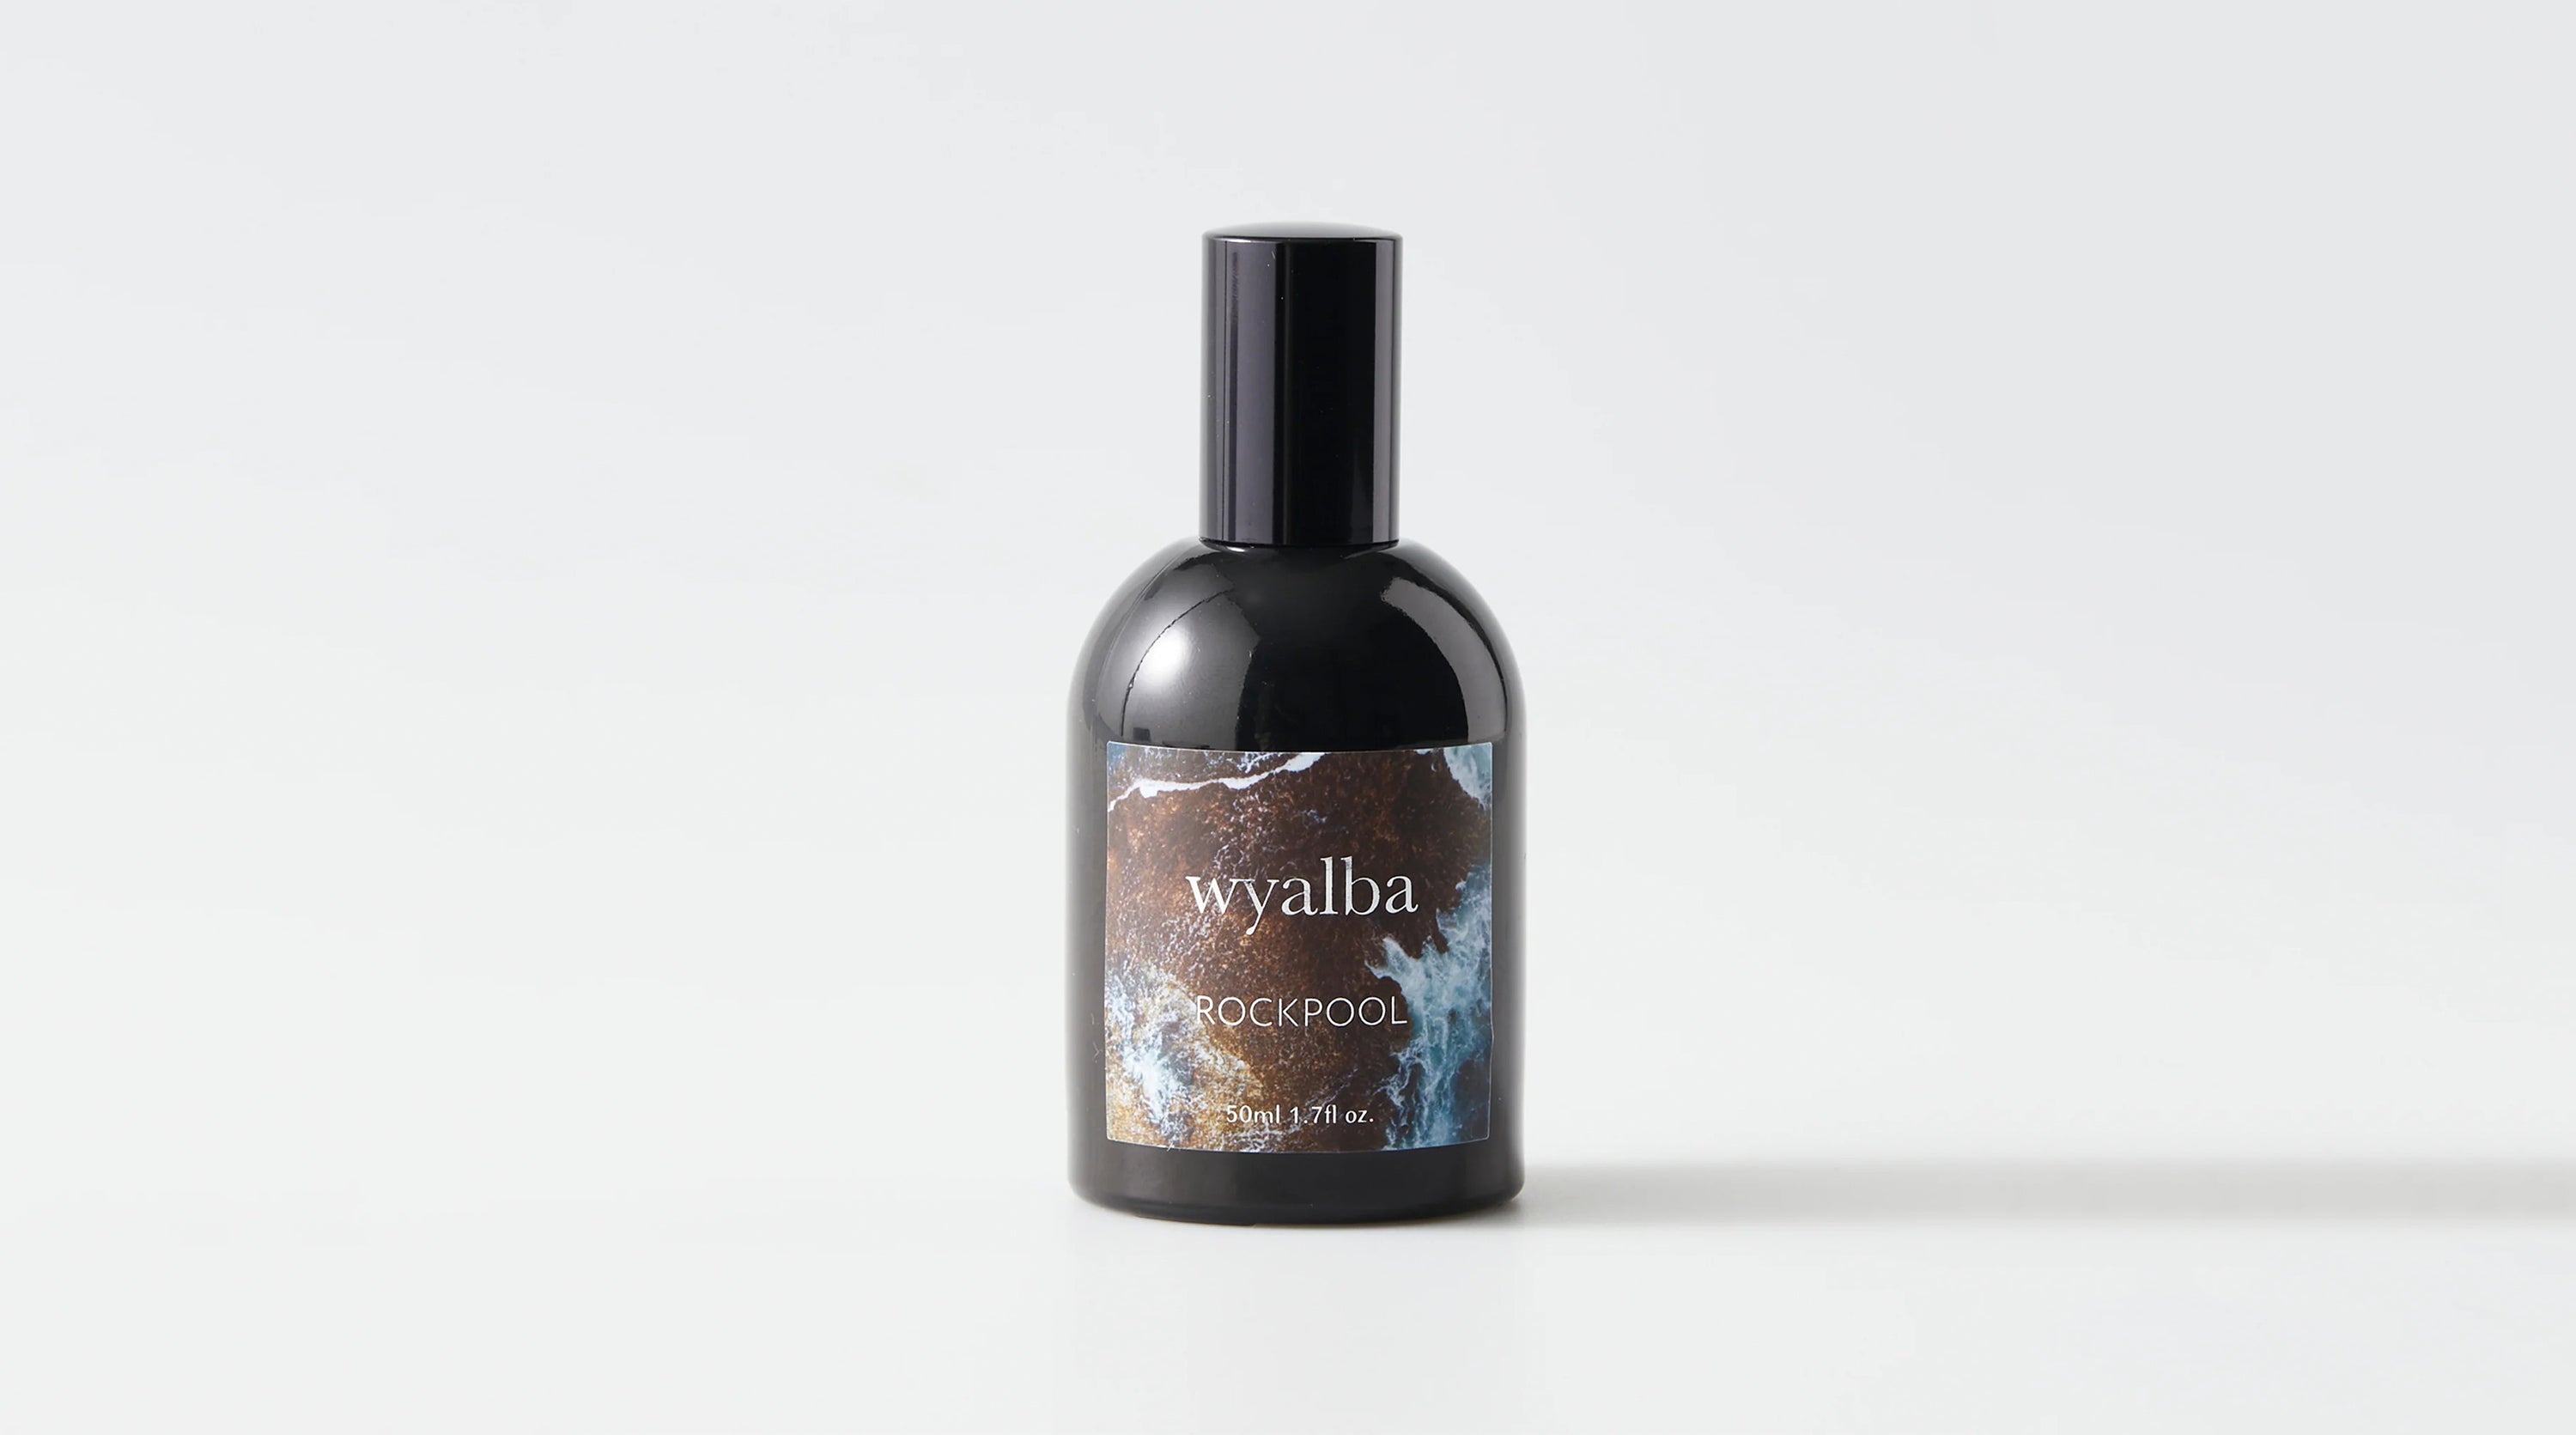 Rockpool by Wyalba 100% Natural Perfume at Sensoriam